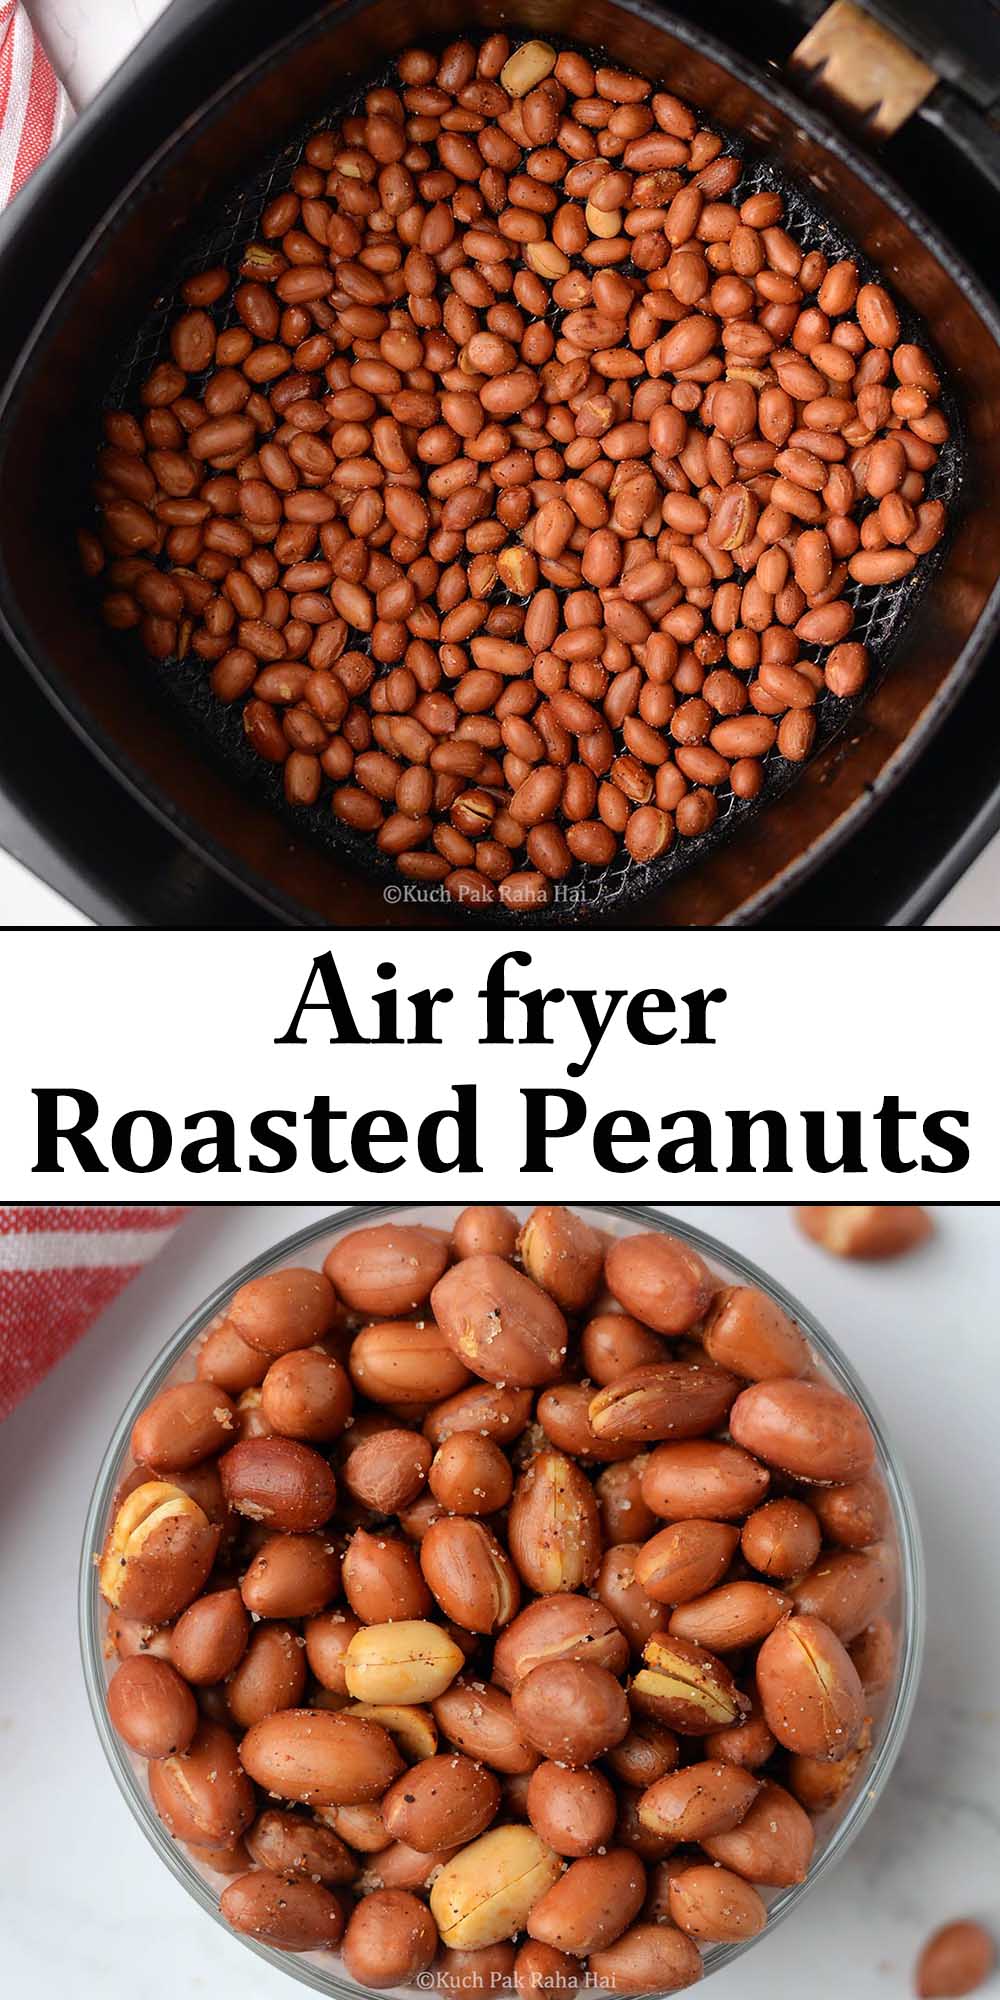 Air fryer peanuts recipe.